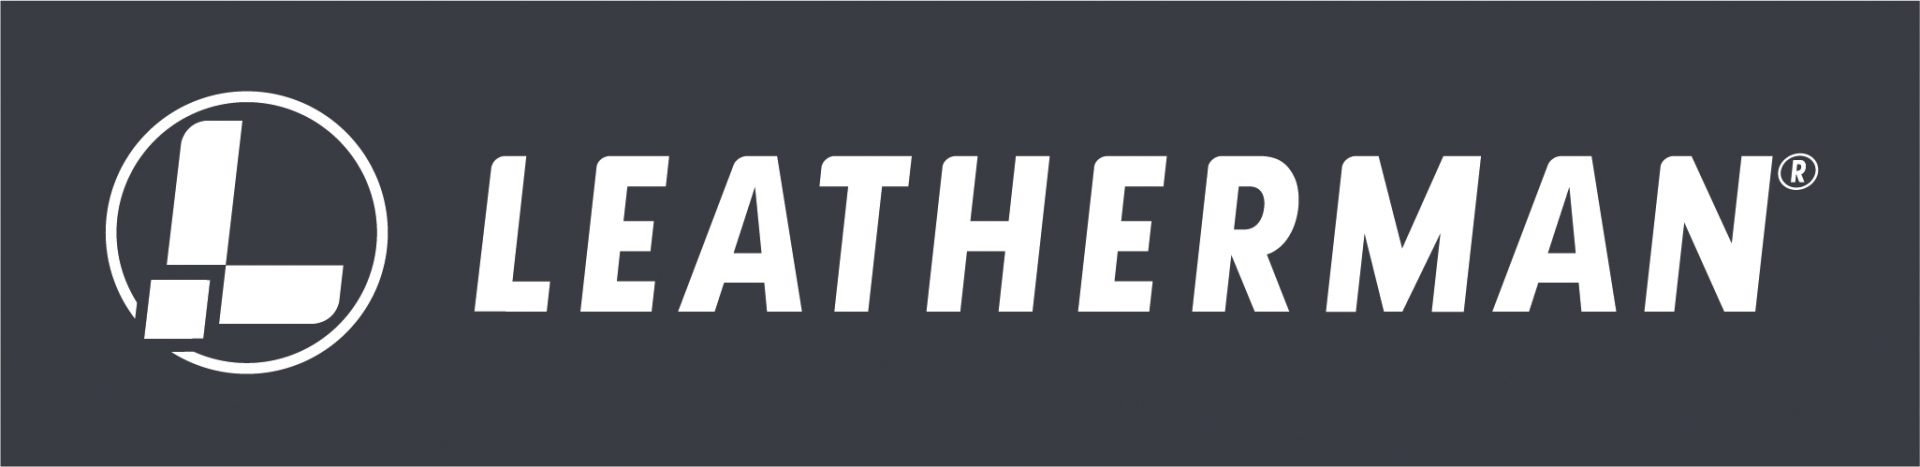 Leatherman_Logo_2019_White_Slate-scaled.jpg